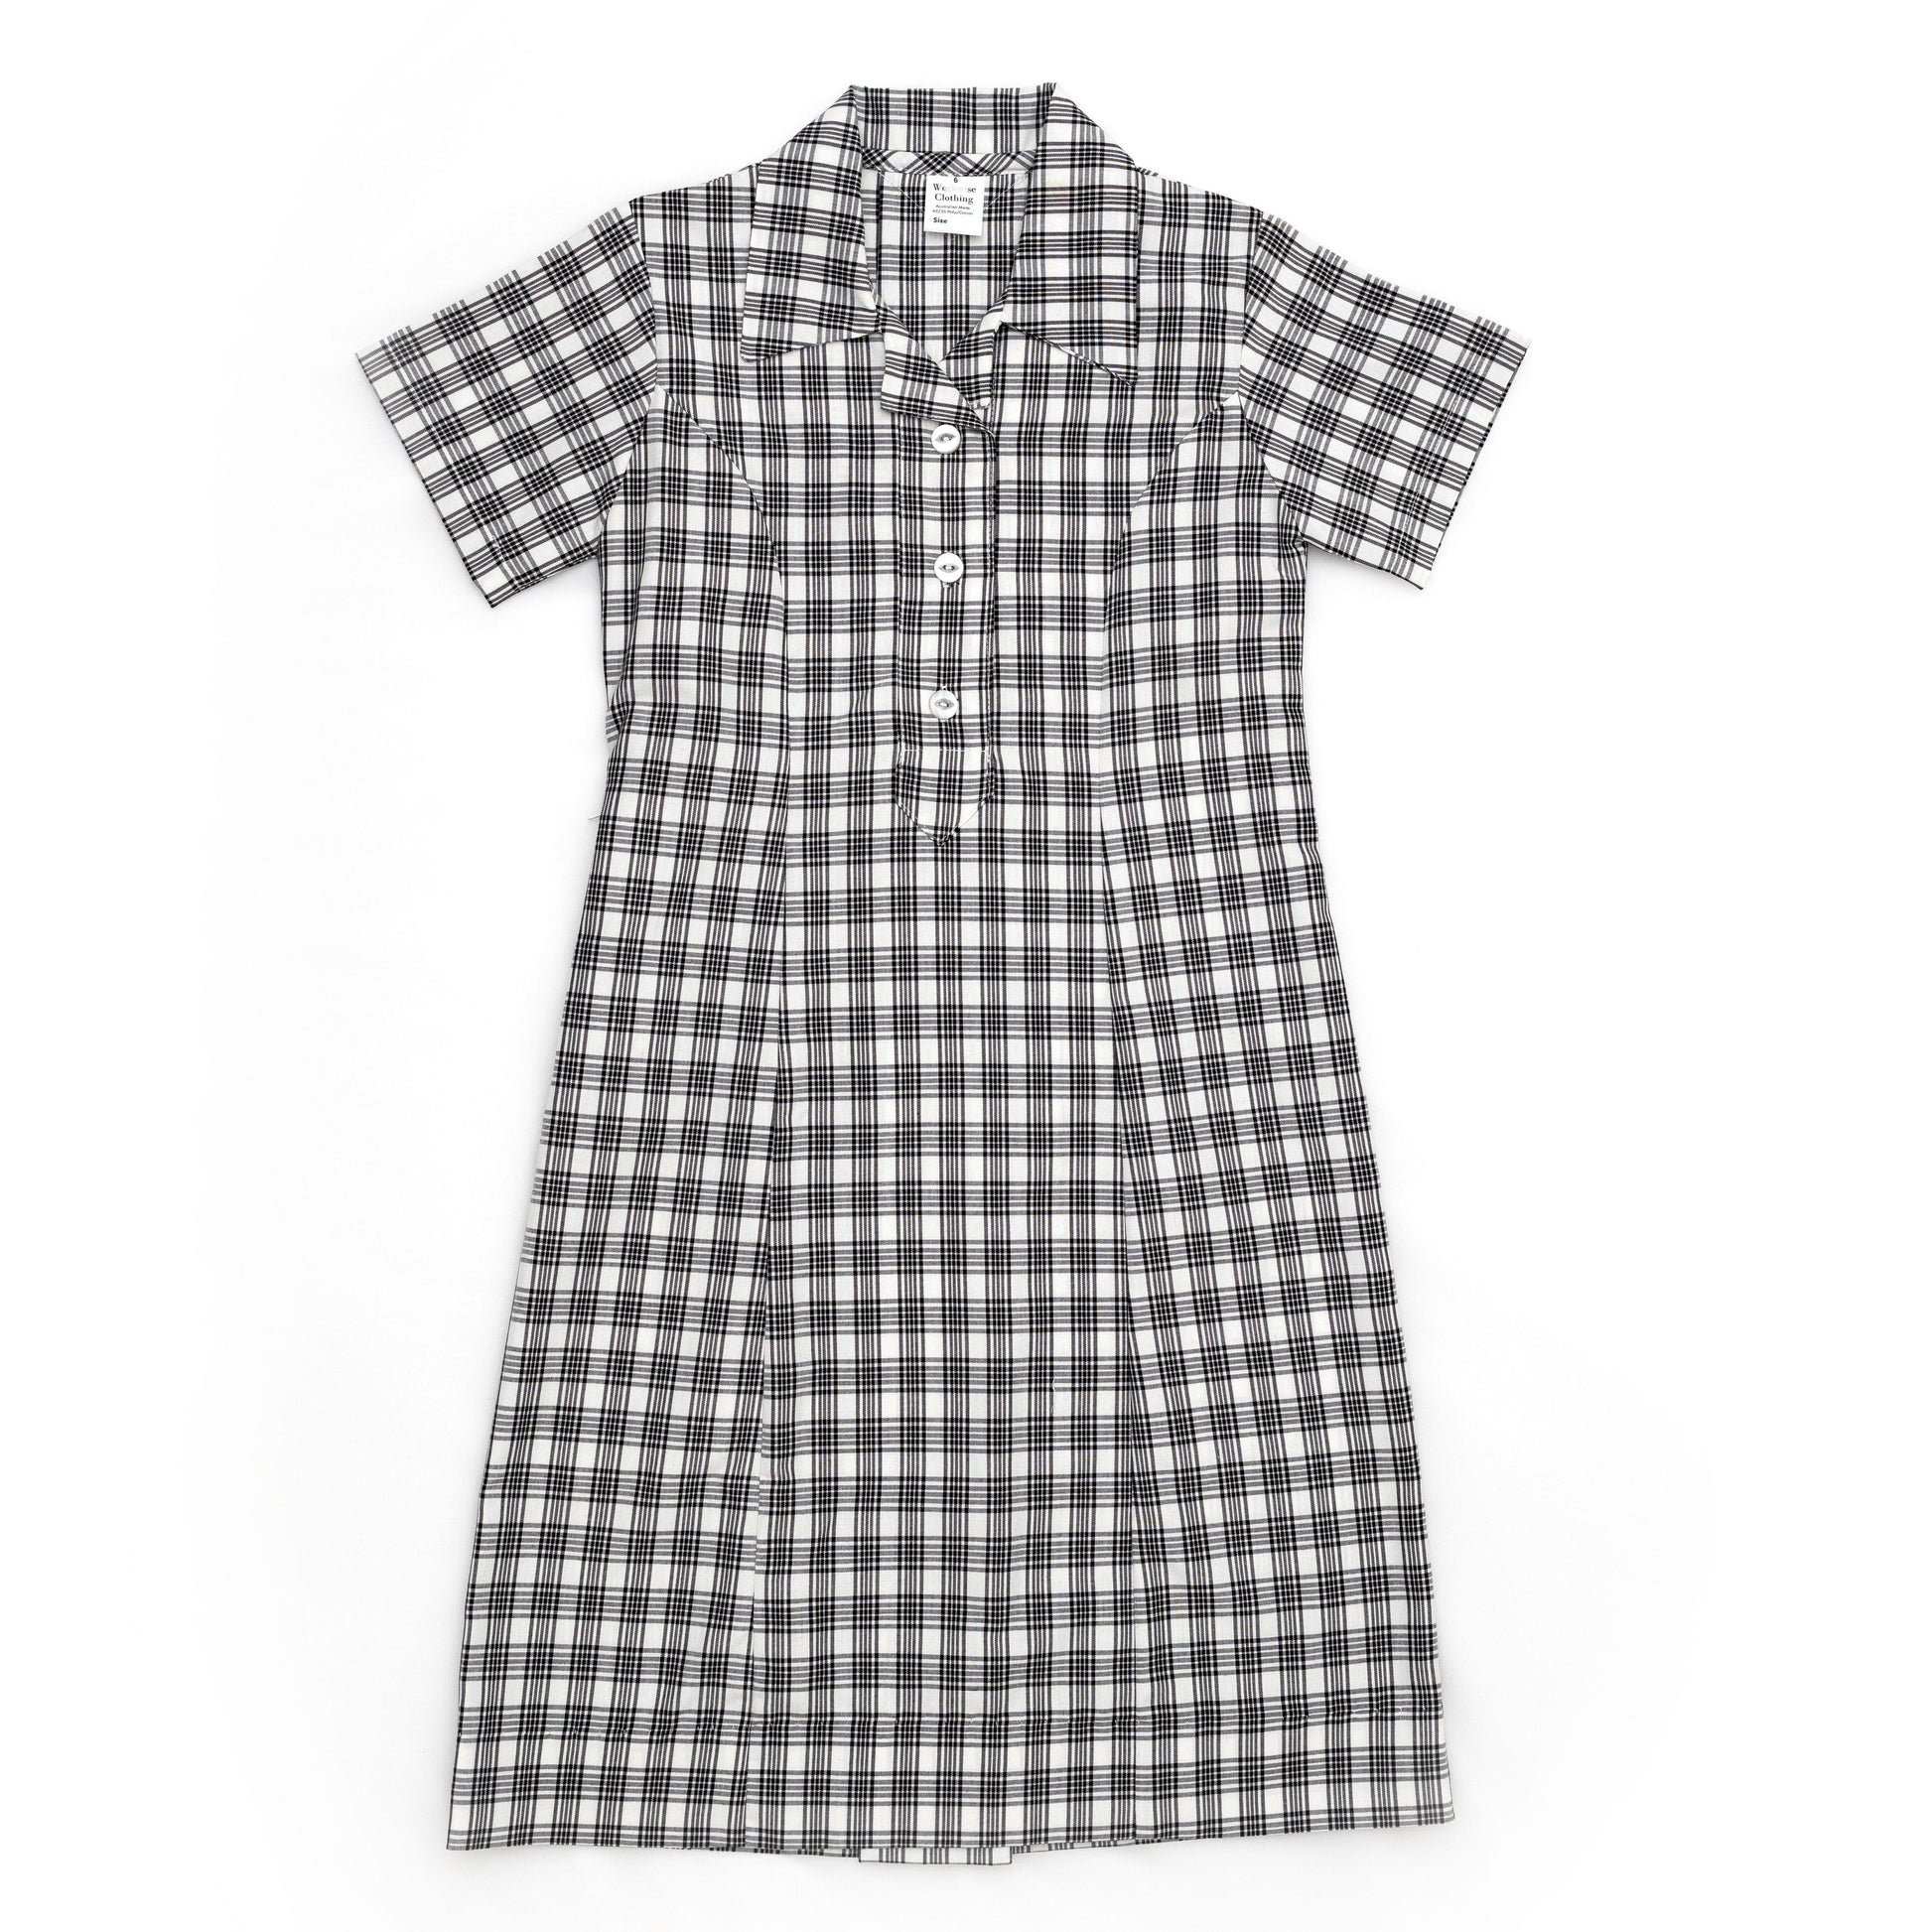 Taree High School Summer Dress | Workwise Clothing